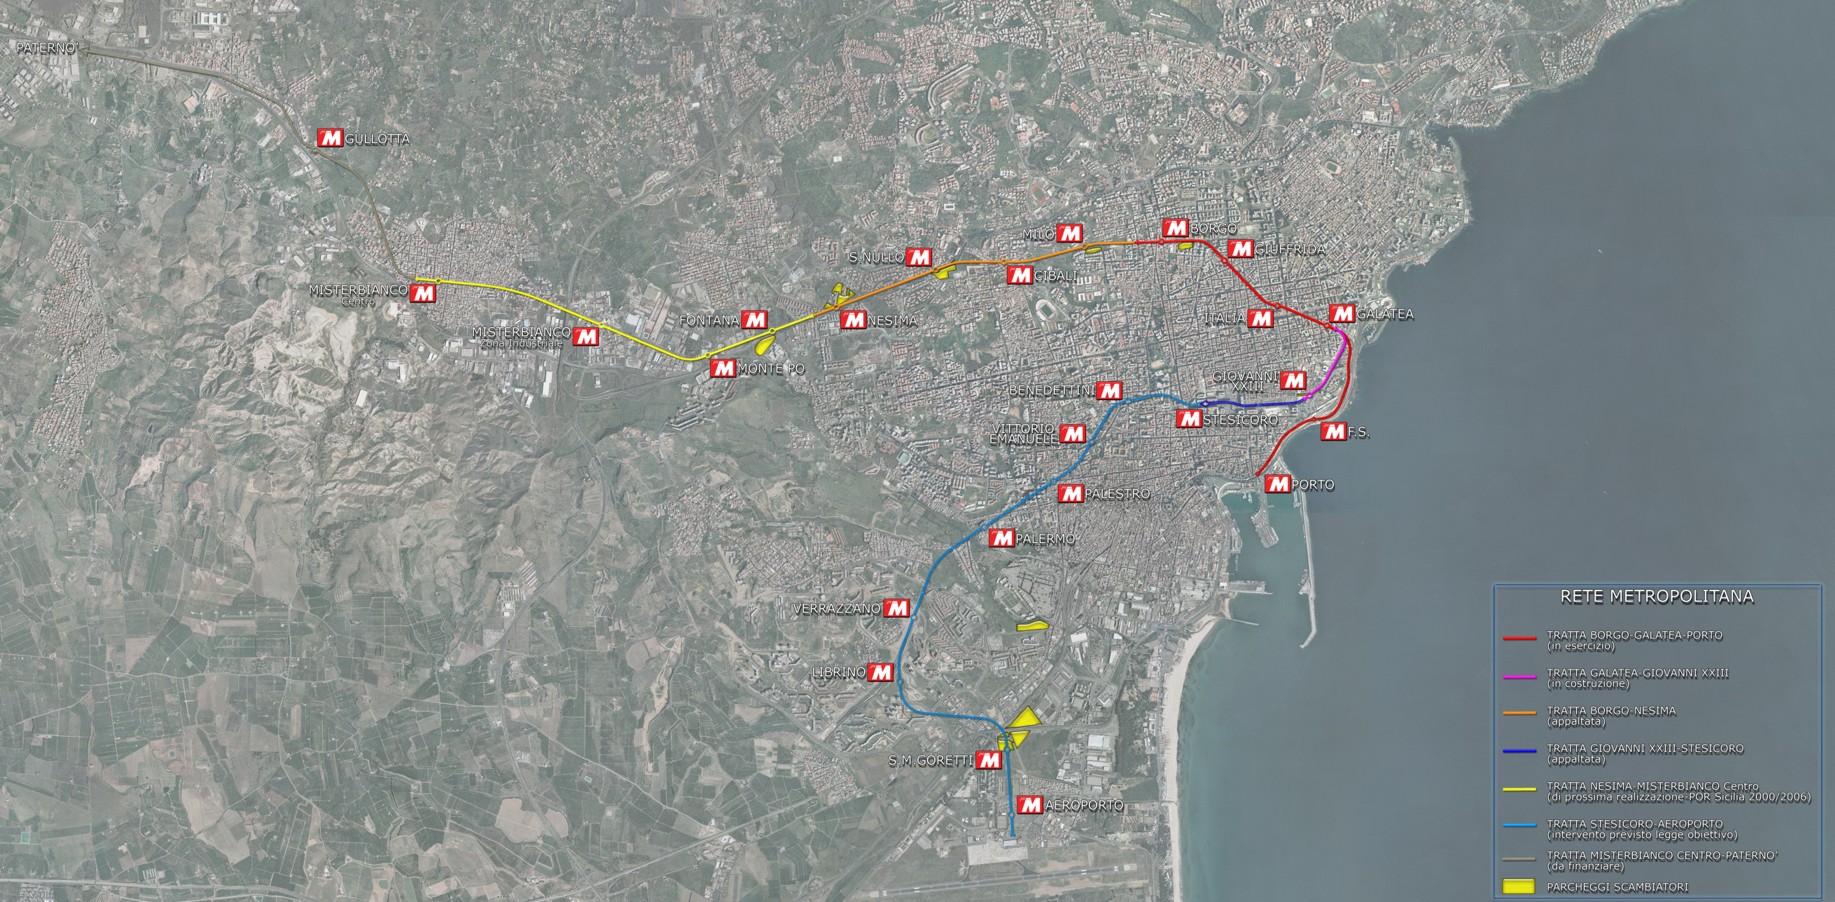 Catania Subway Map